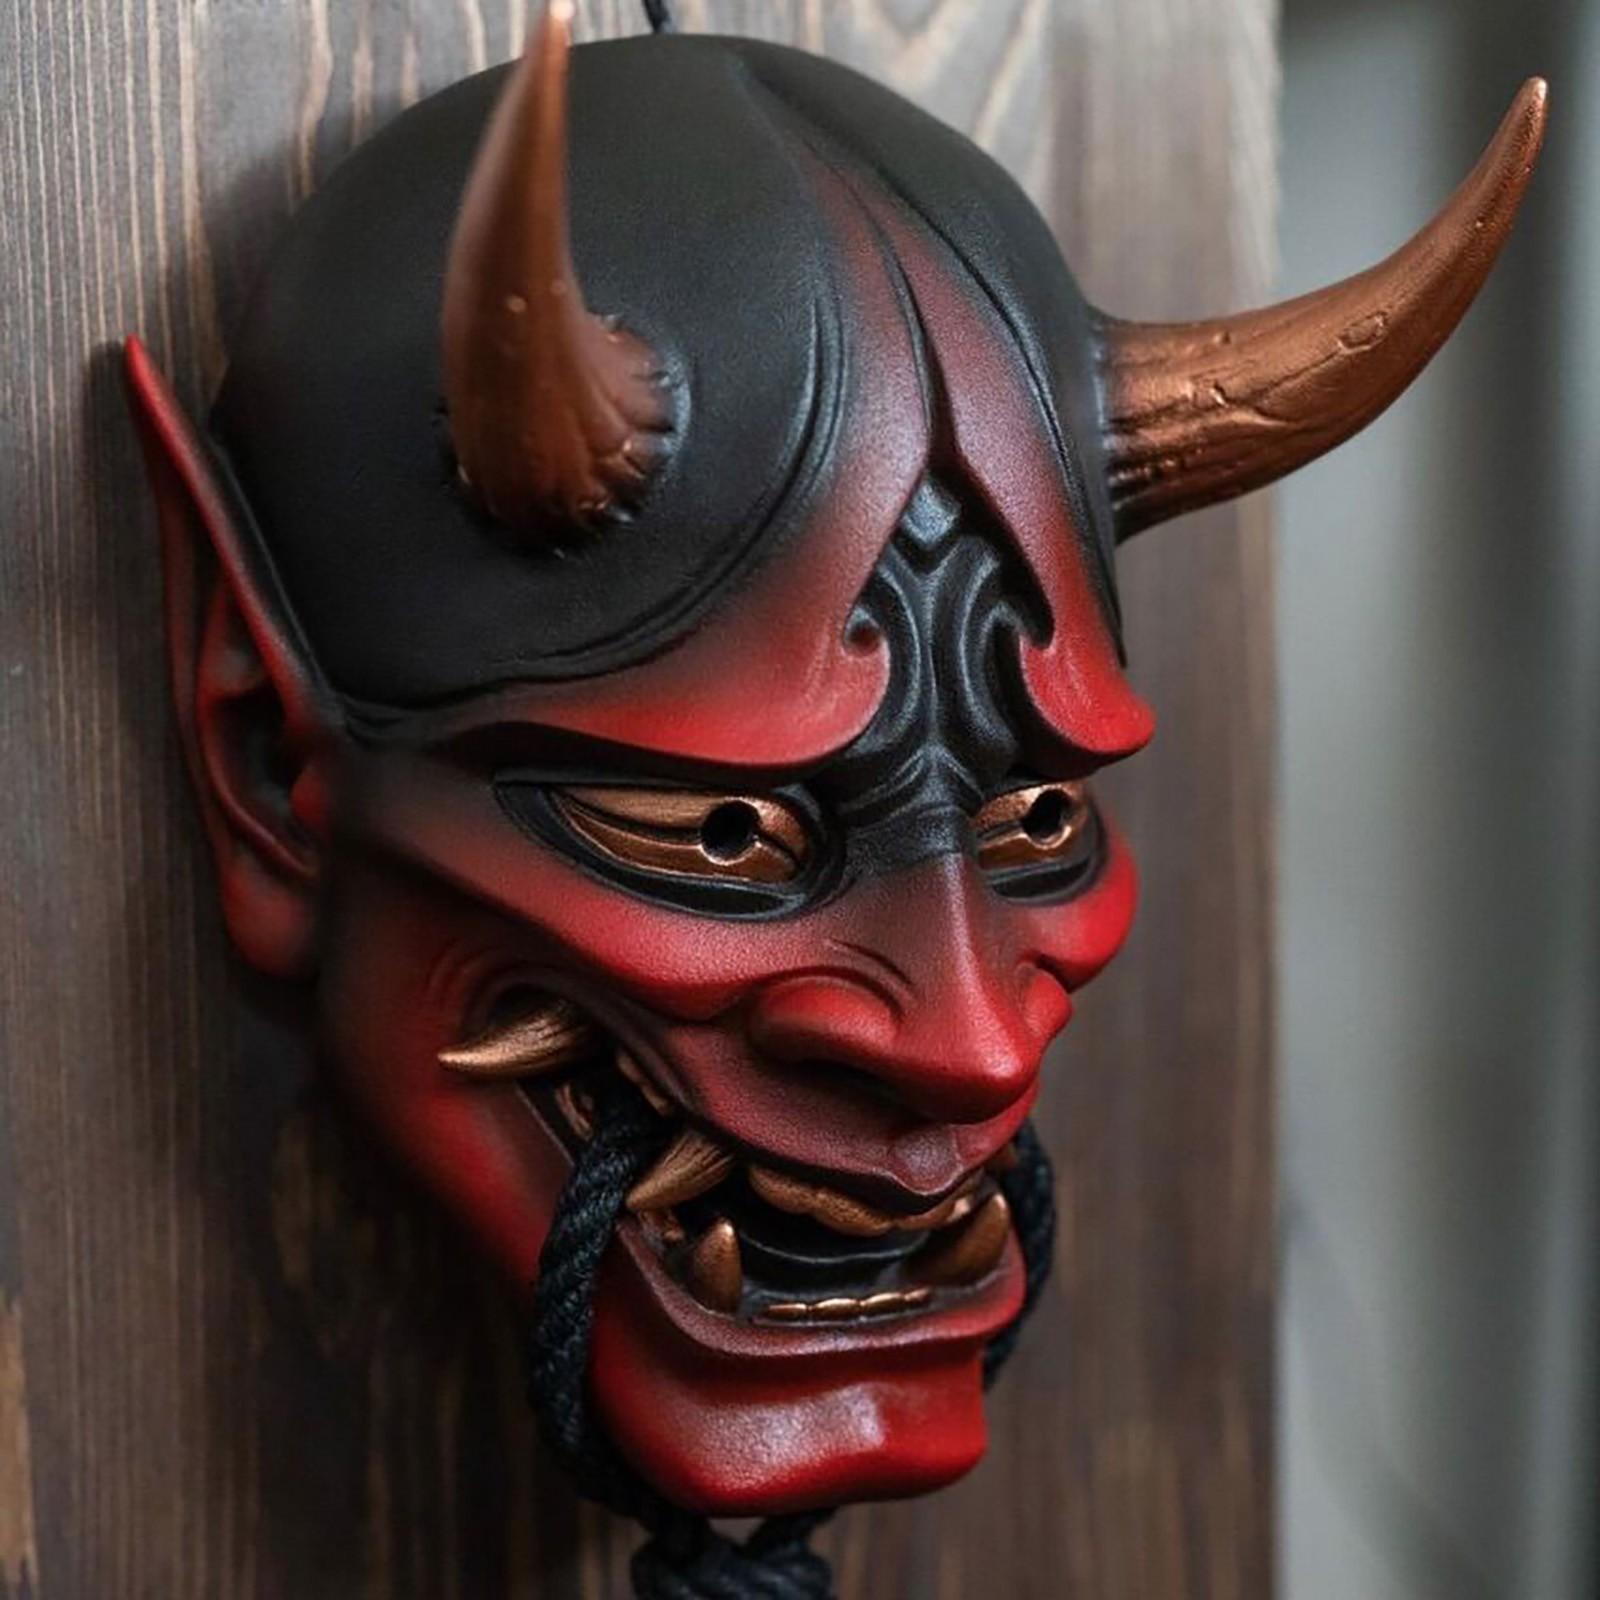 Topeng setan Jepang di wajah karnaval